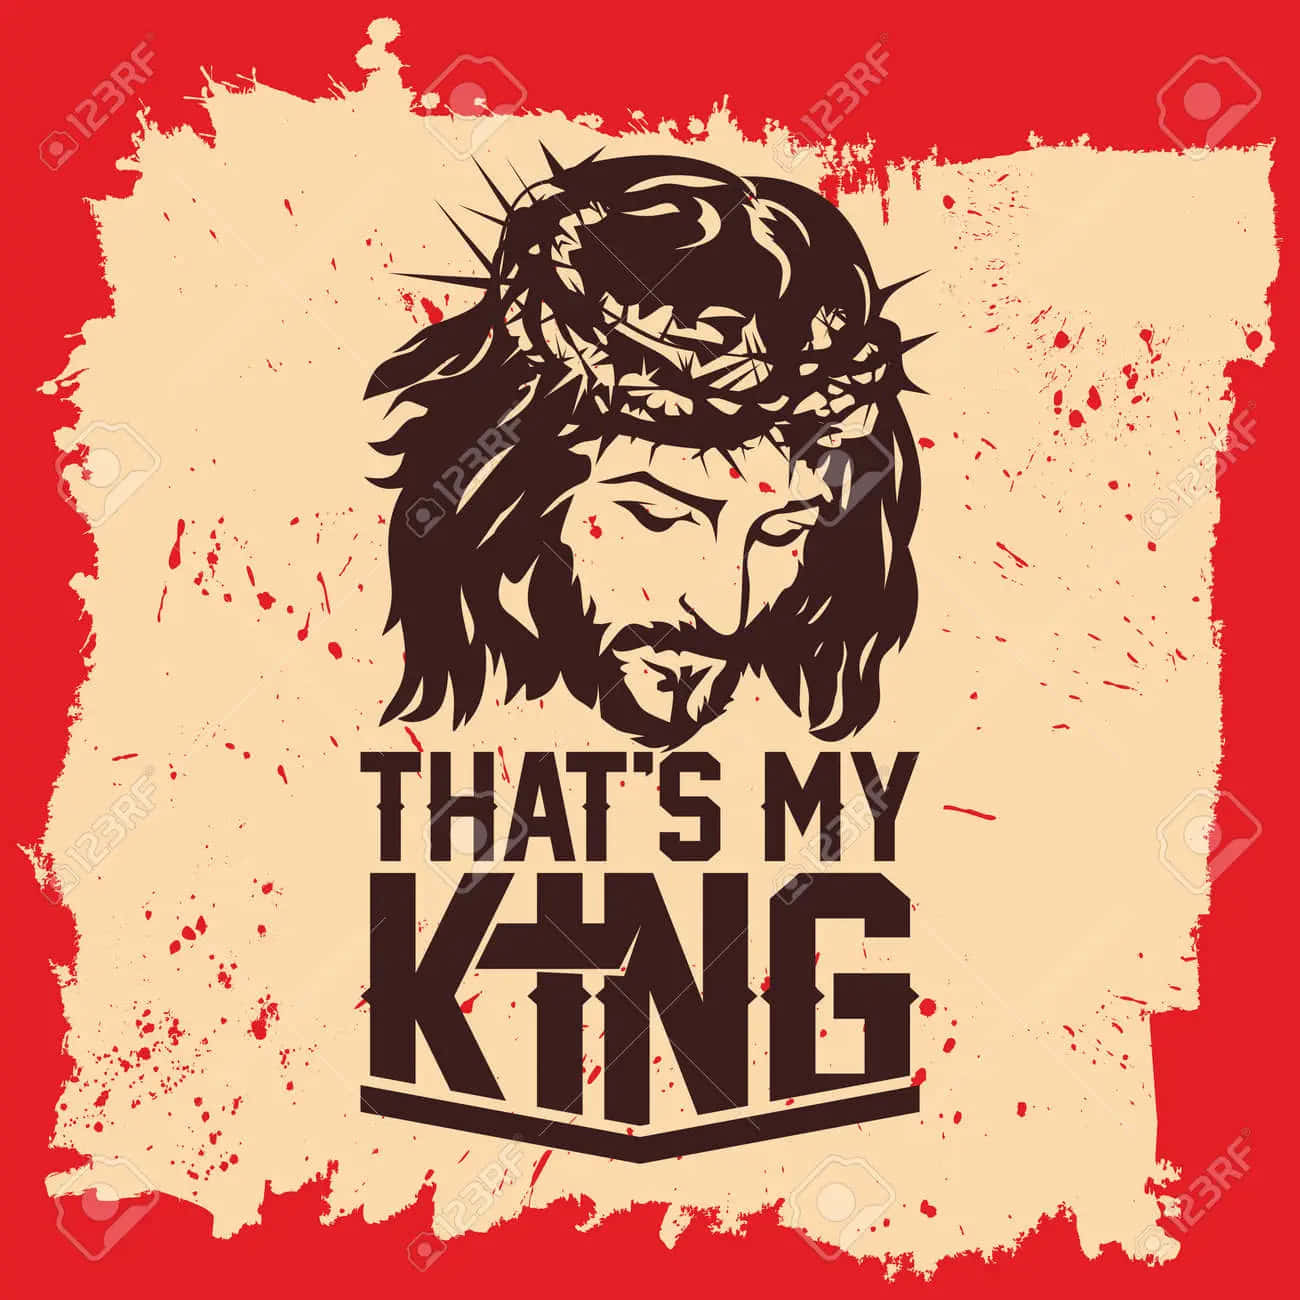 Jesus Is King - Trust In His Plan Wallpaper